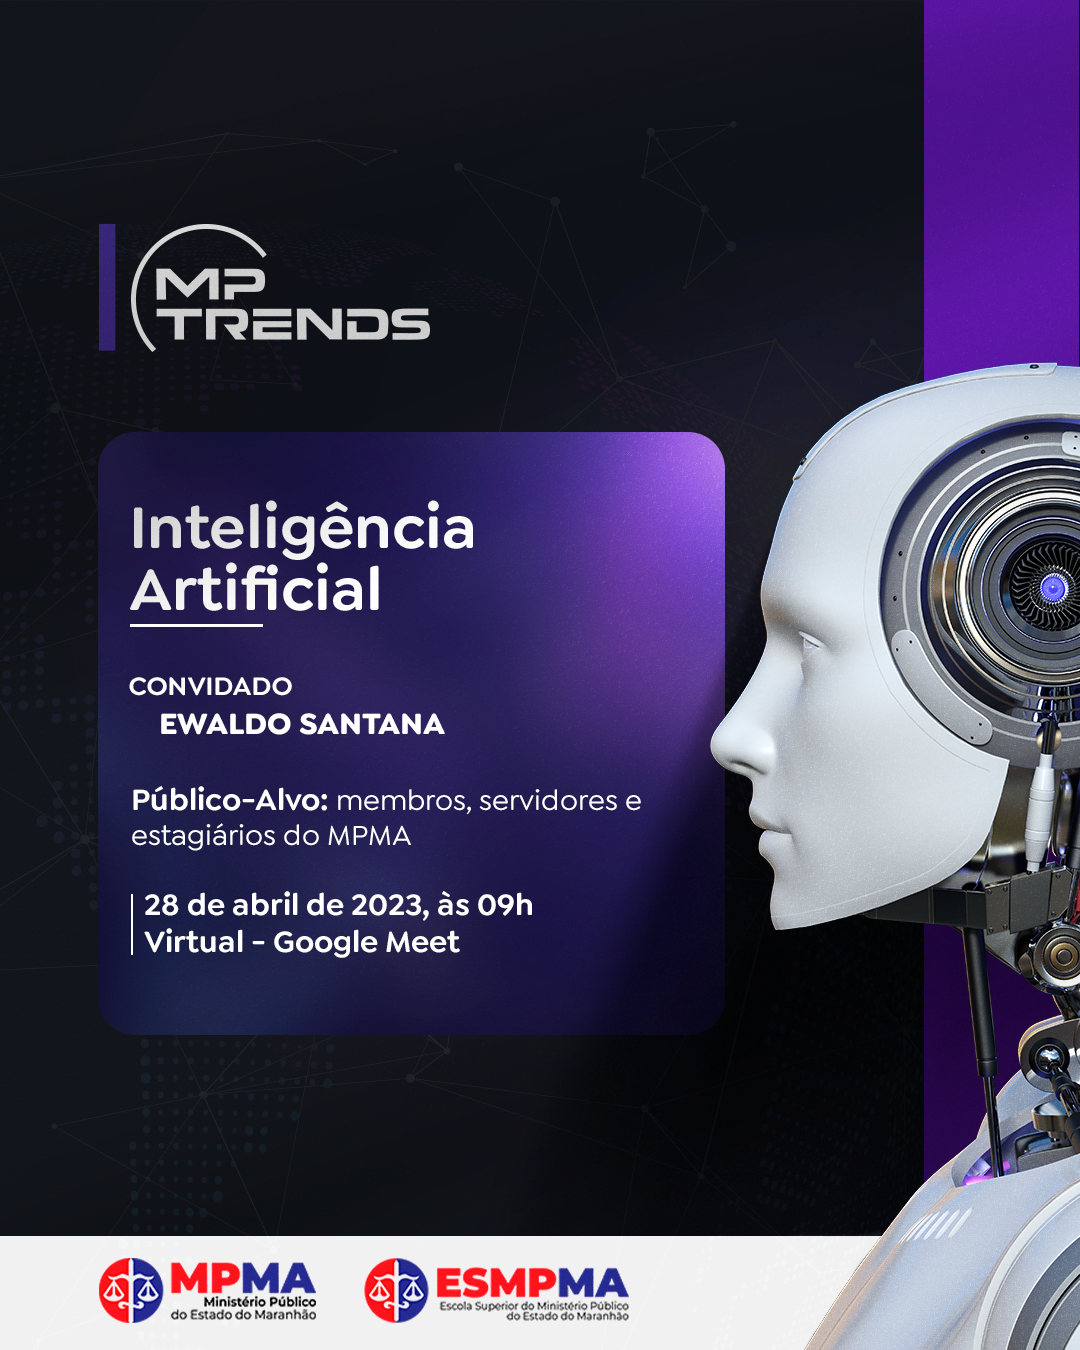 MP-TRENDS: Inteligência Artificial